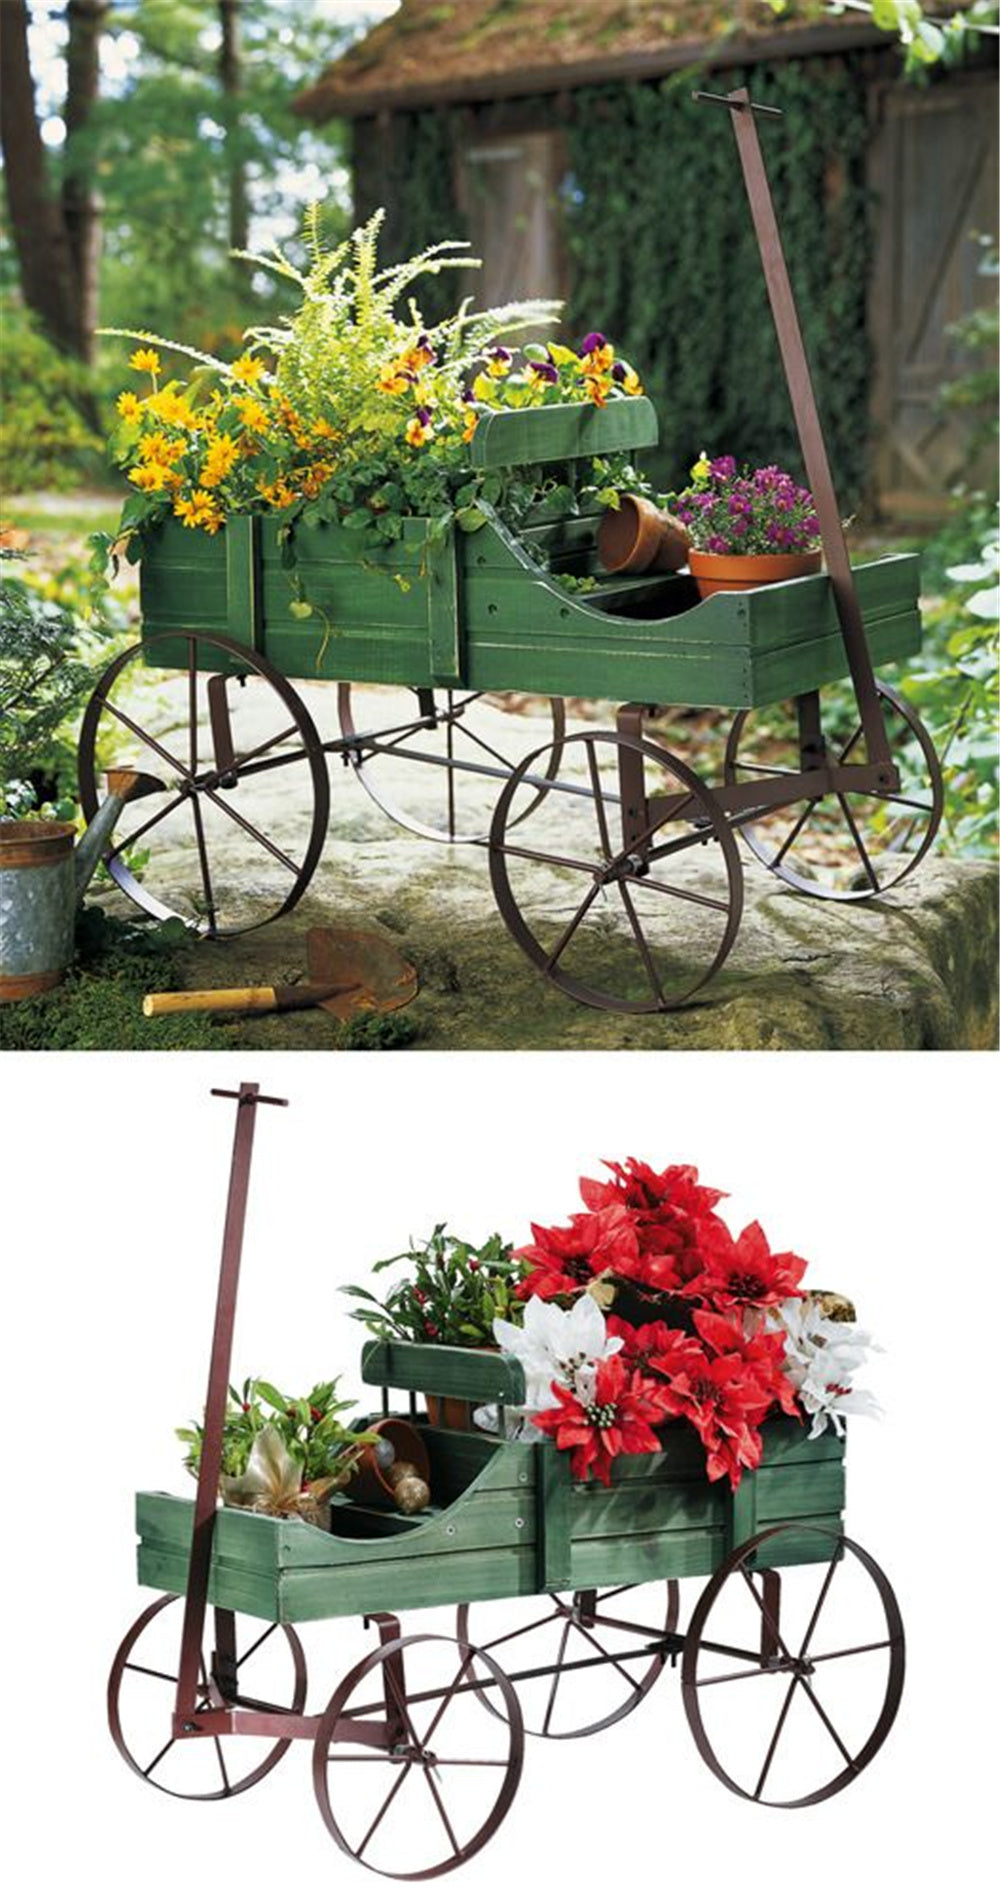 Amish Wagon Decorative Indoor/Outdoor Garden Backyard Planter